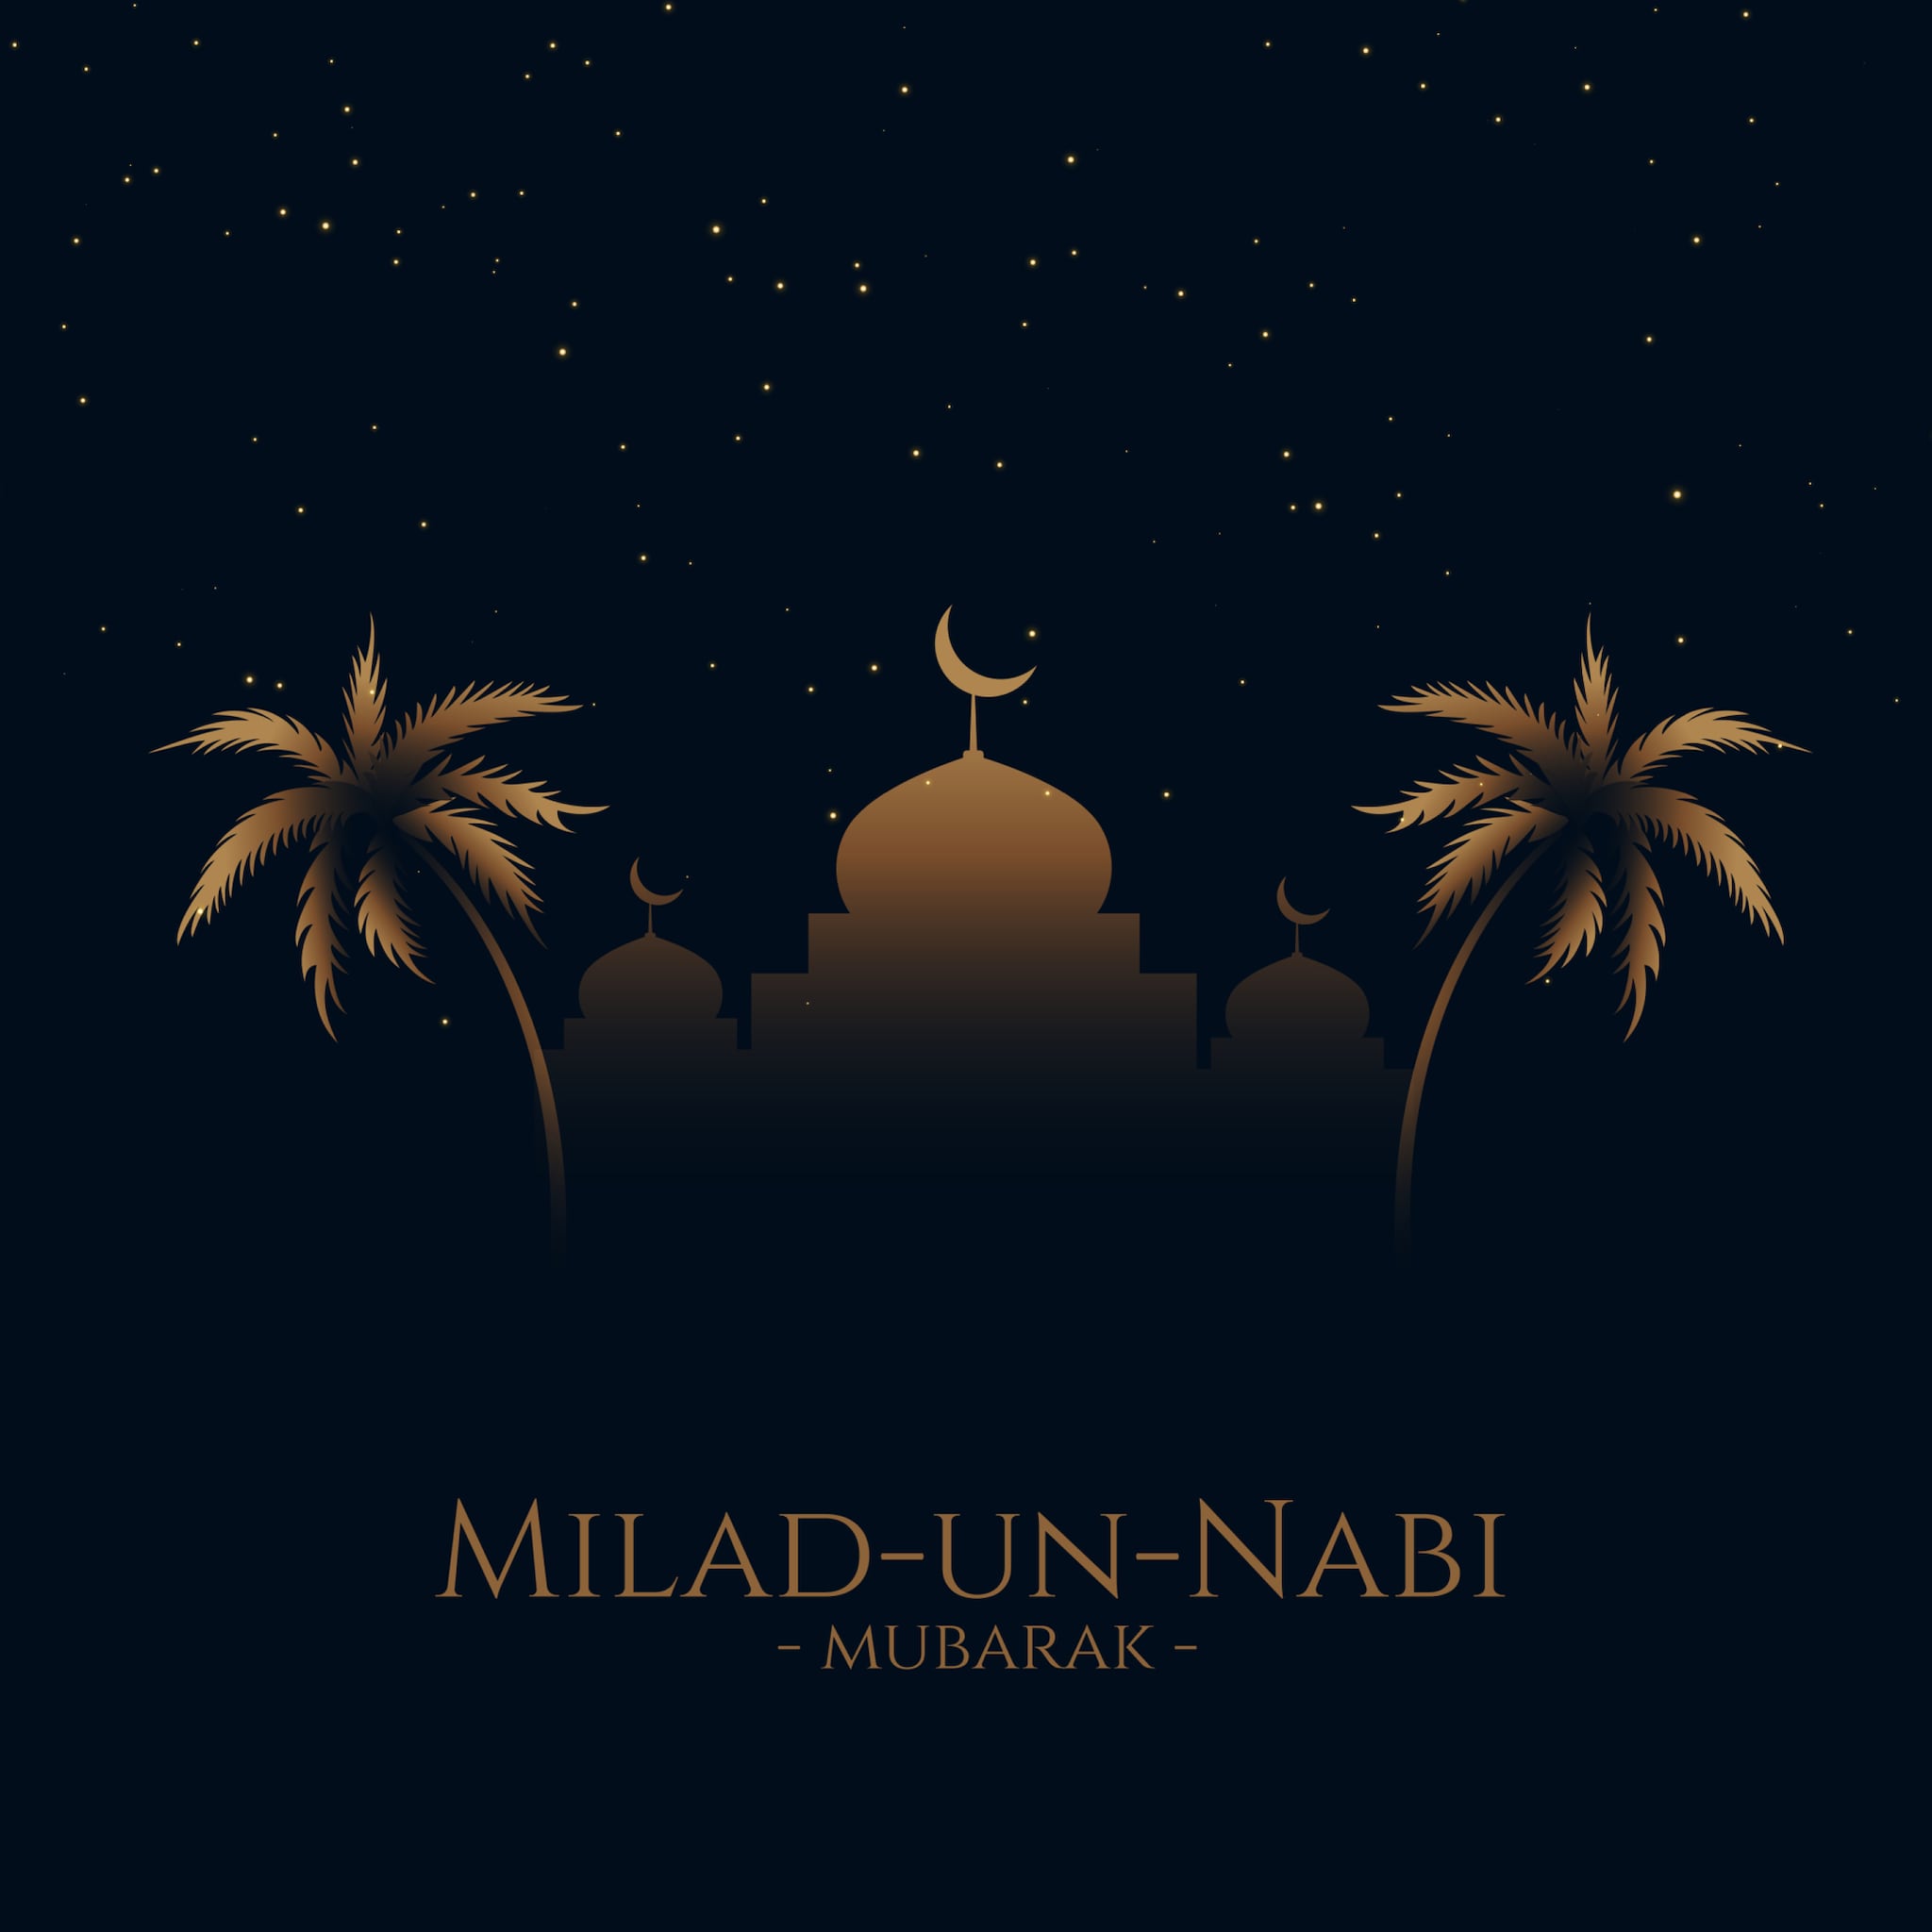 Eid un nabi wishes happy milad Happy Eid